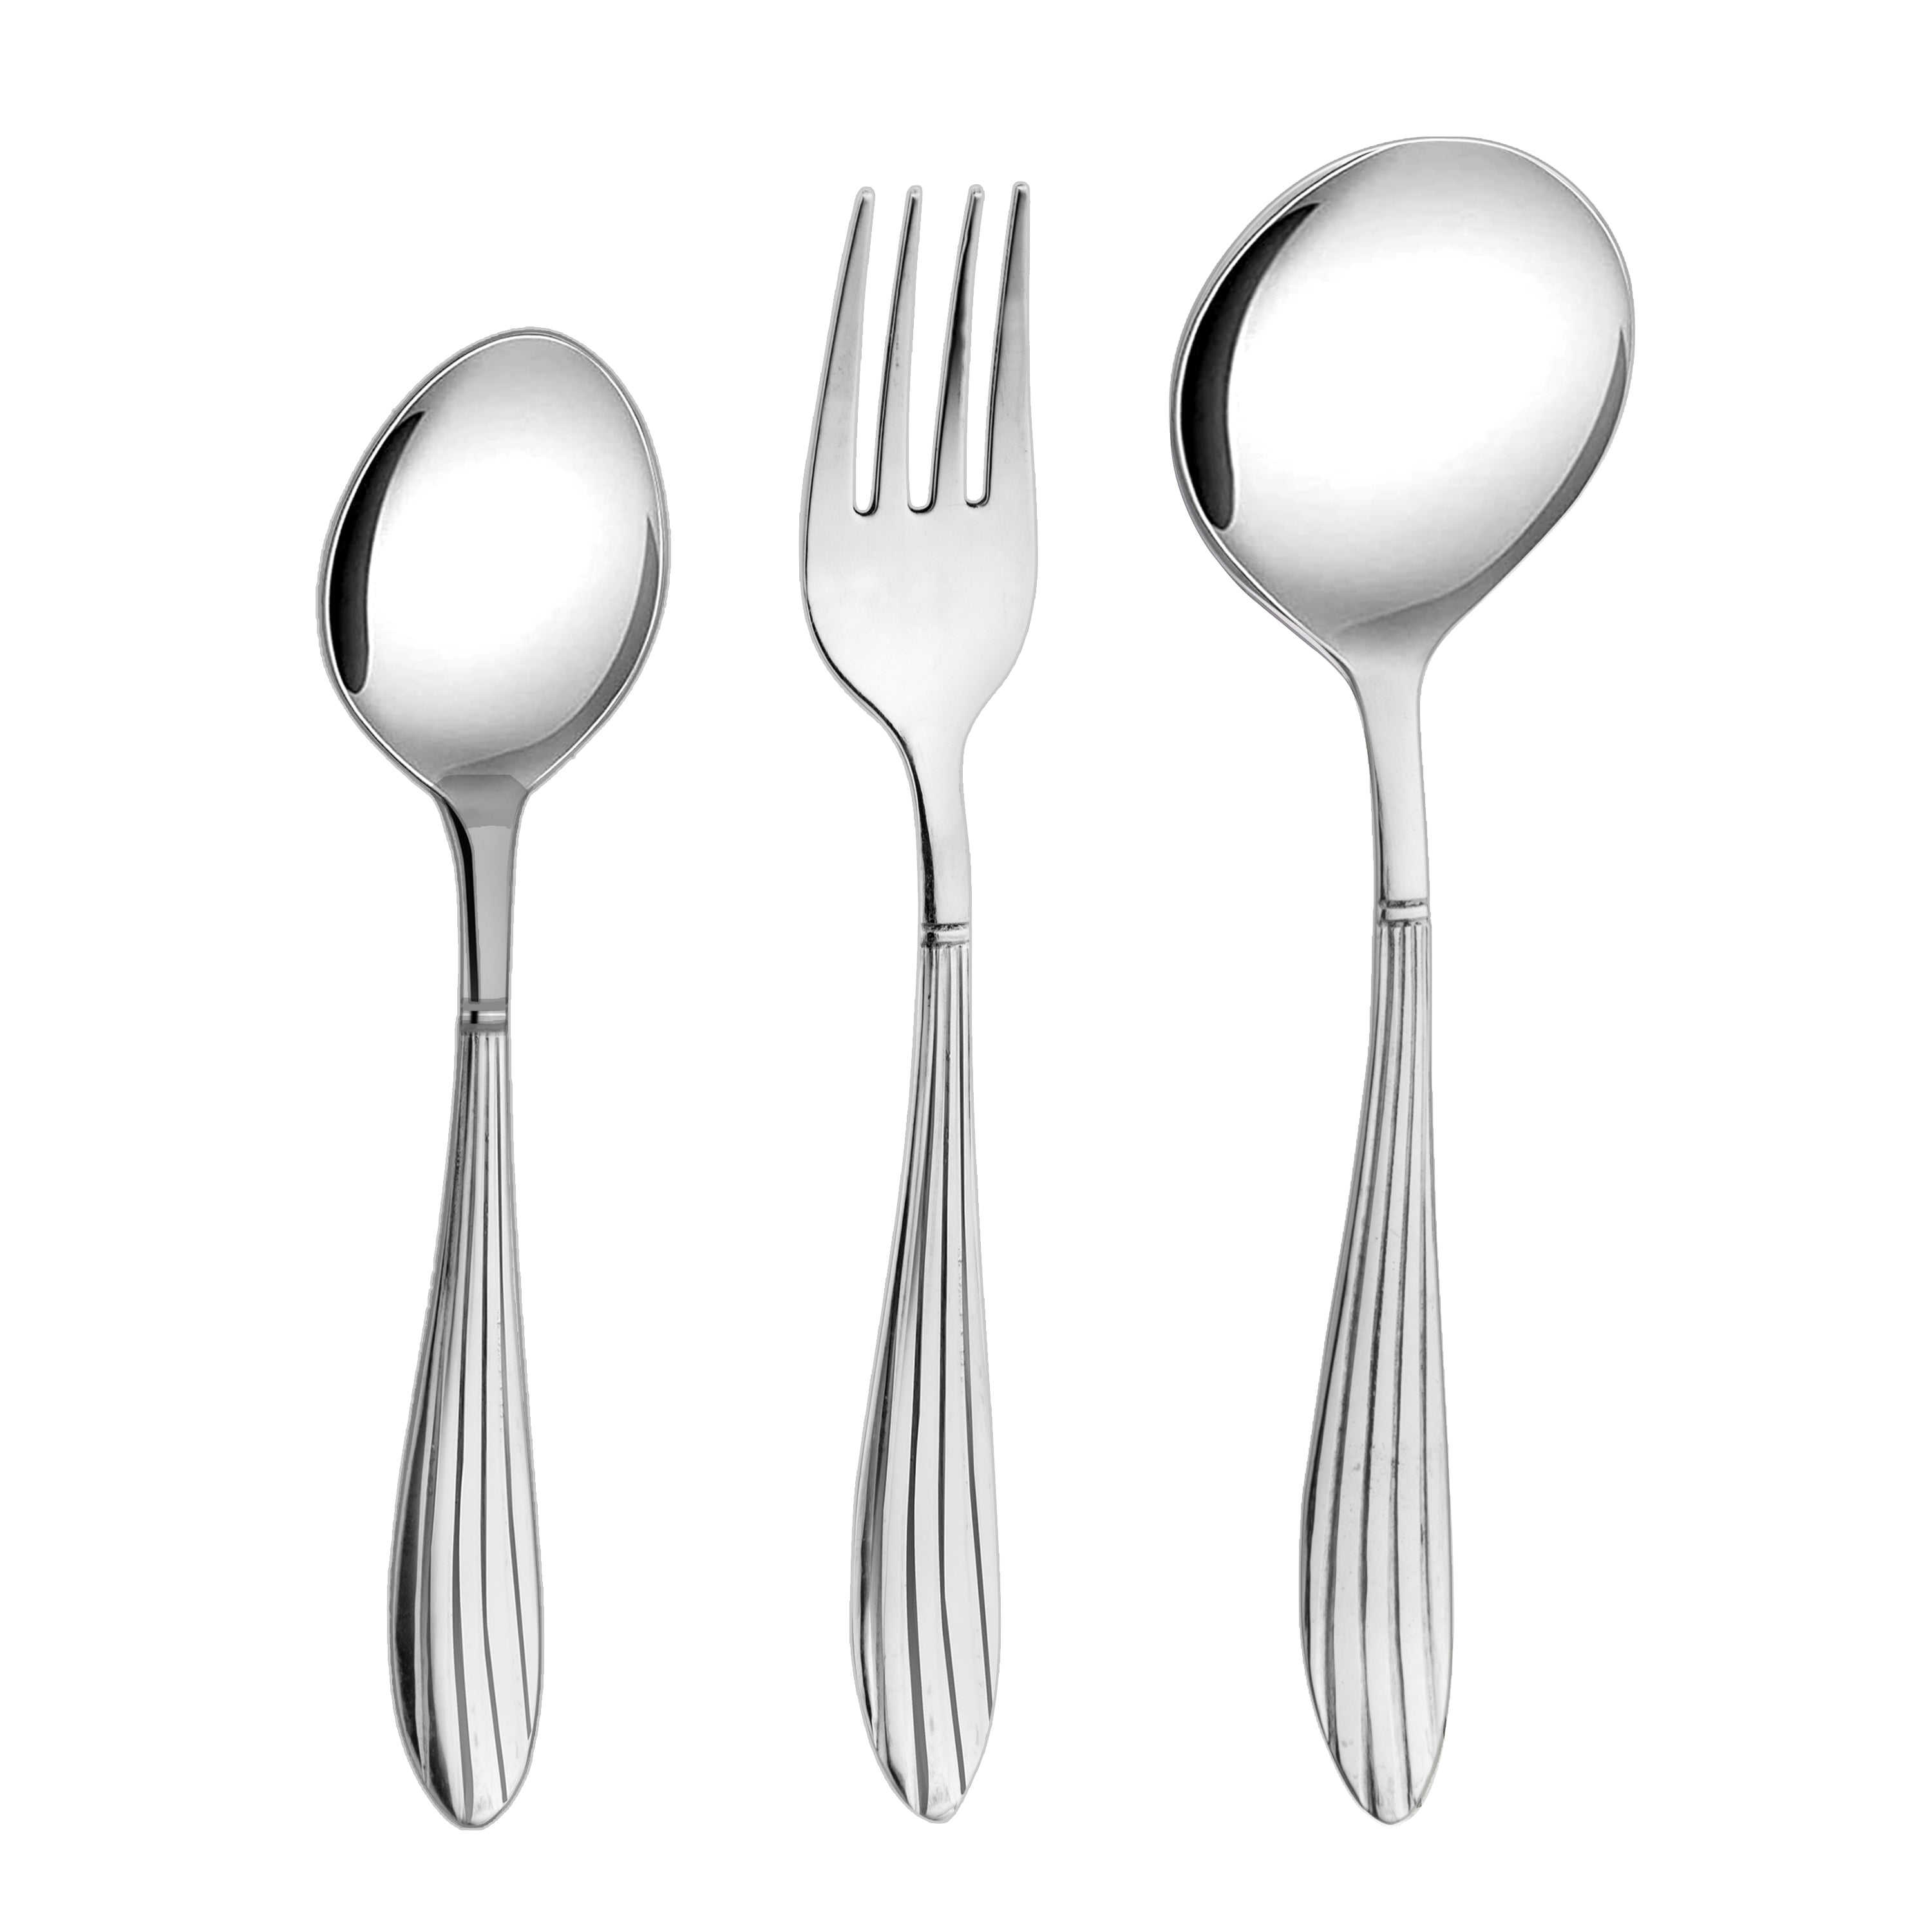 Arias Sysco Cutlery Set of 18 (Silver)